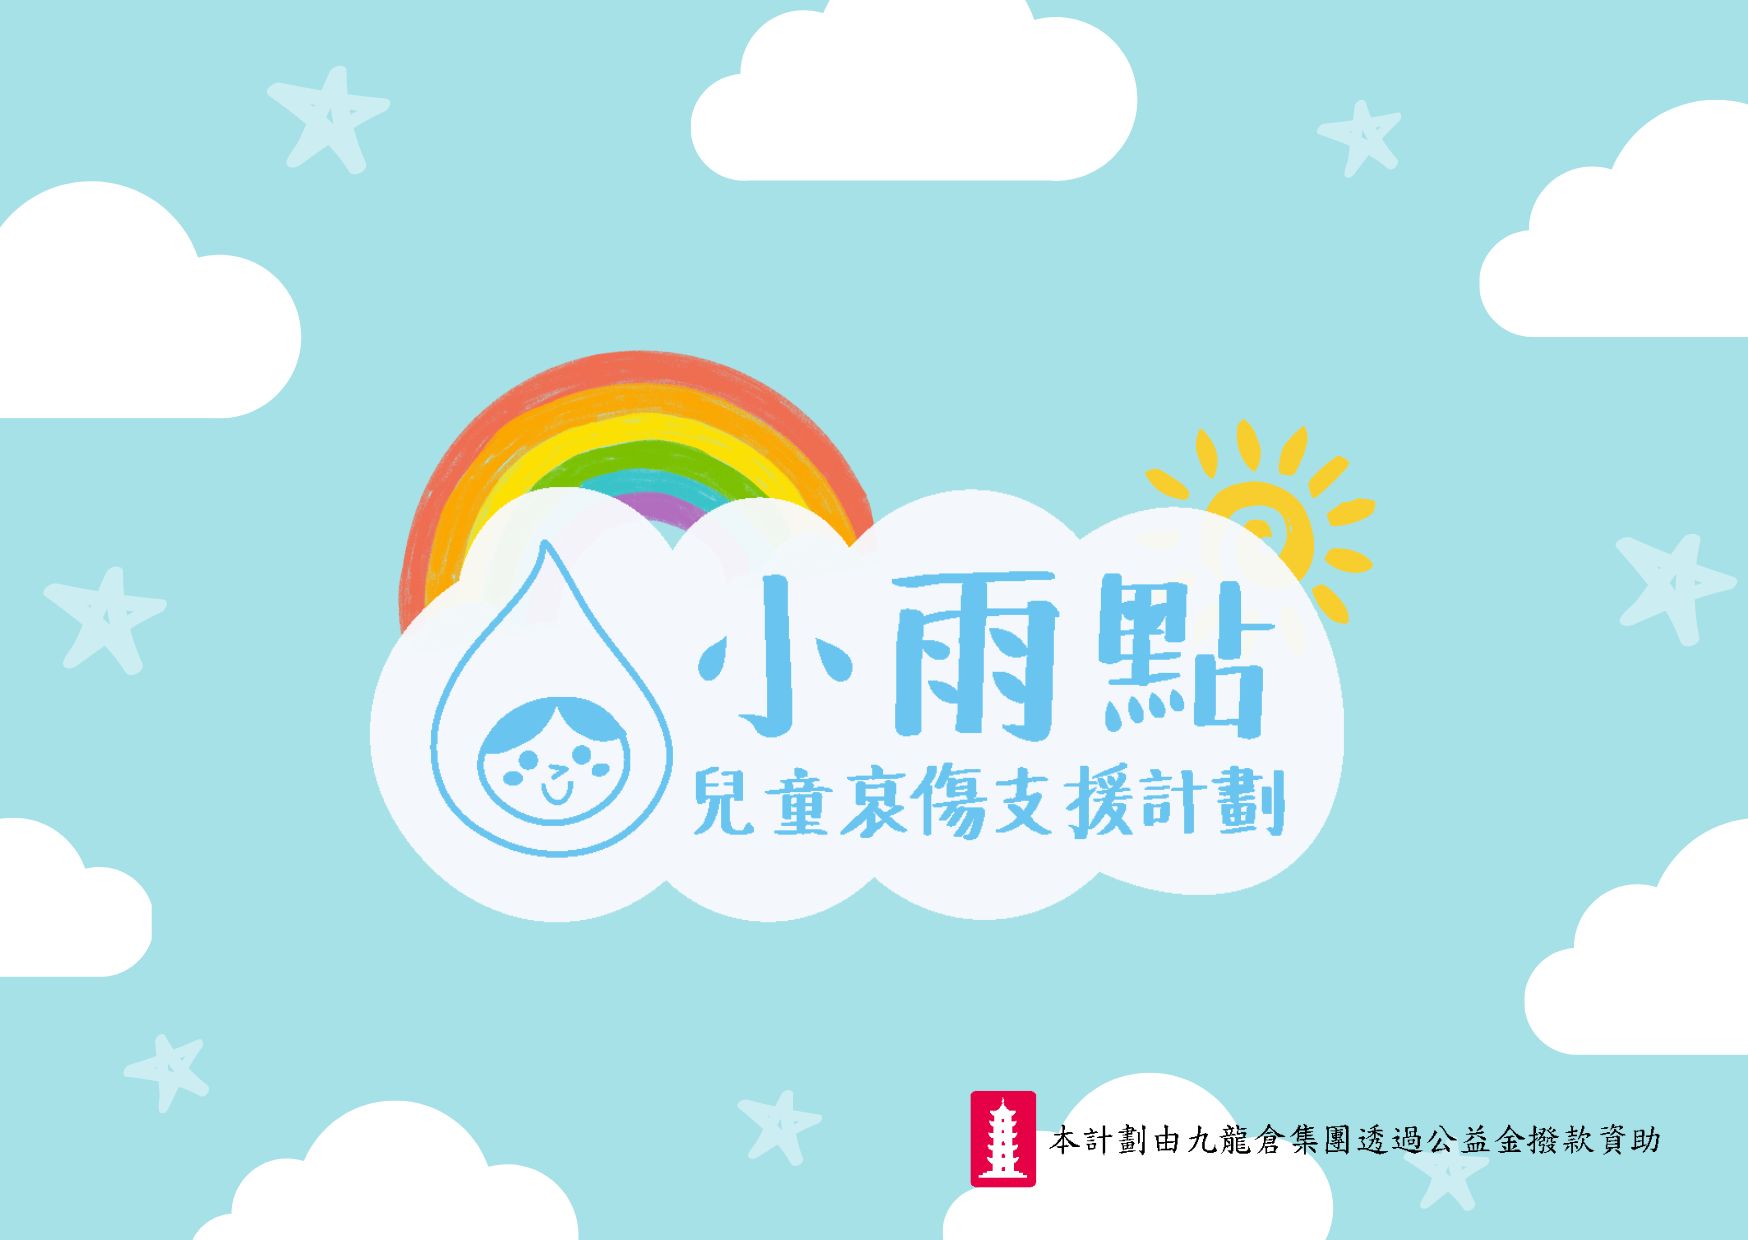 raindrop_logo